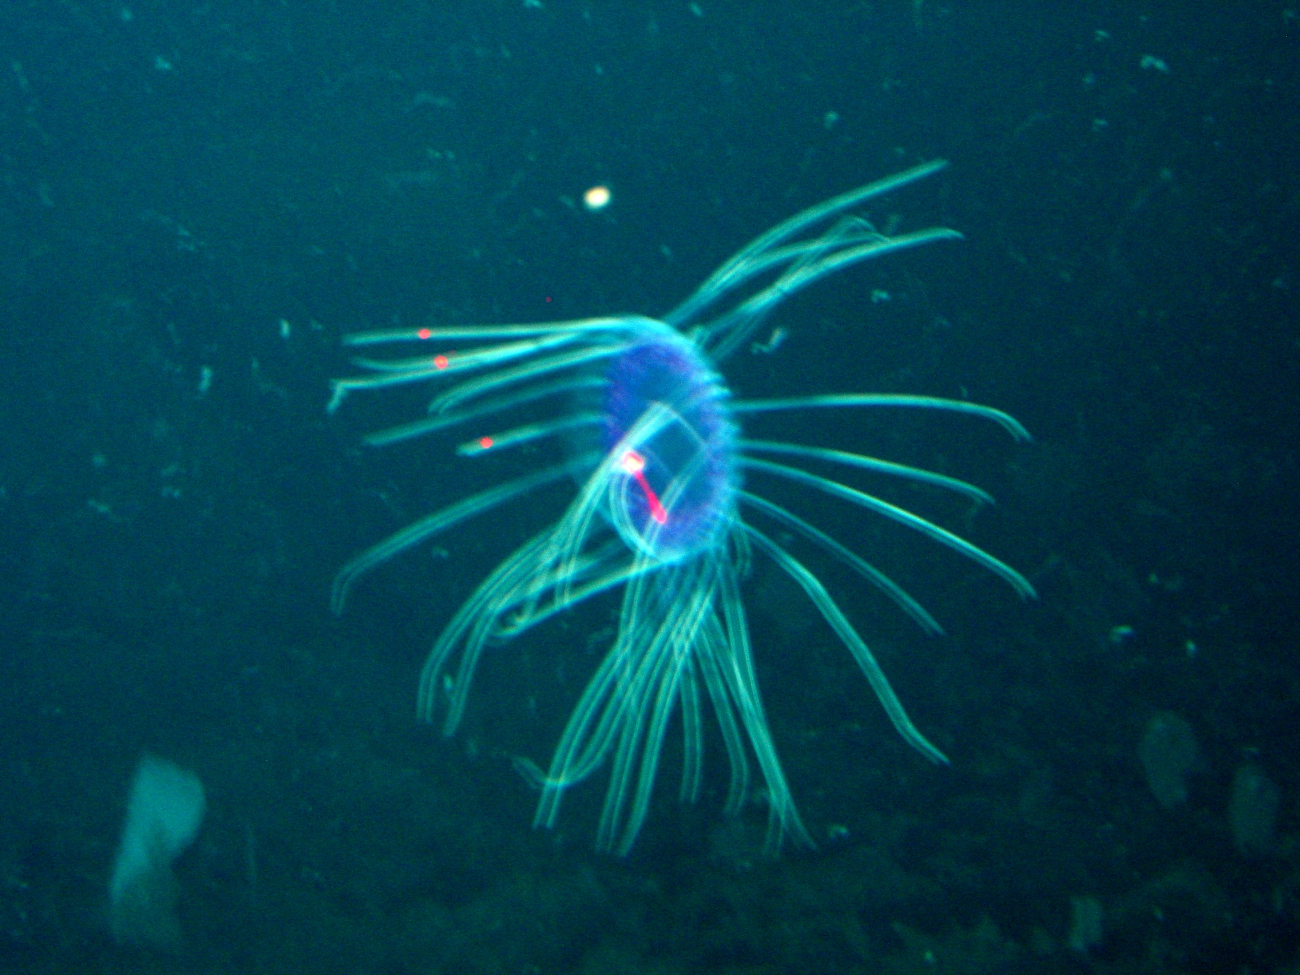 An out of focus purple medusae